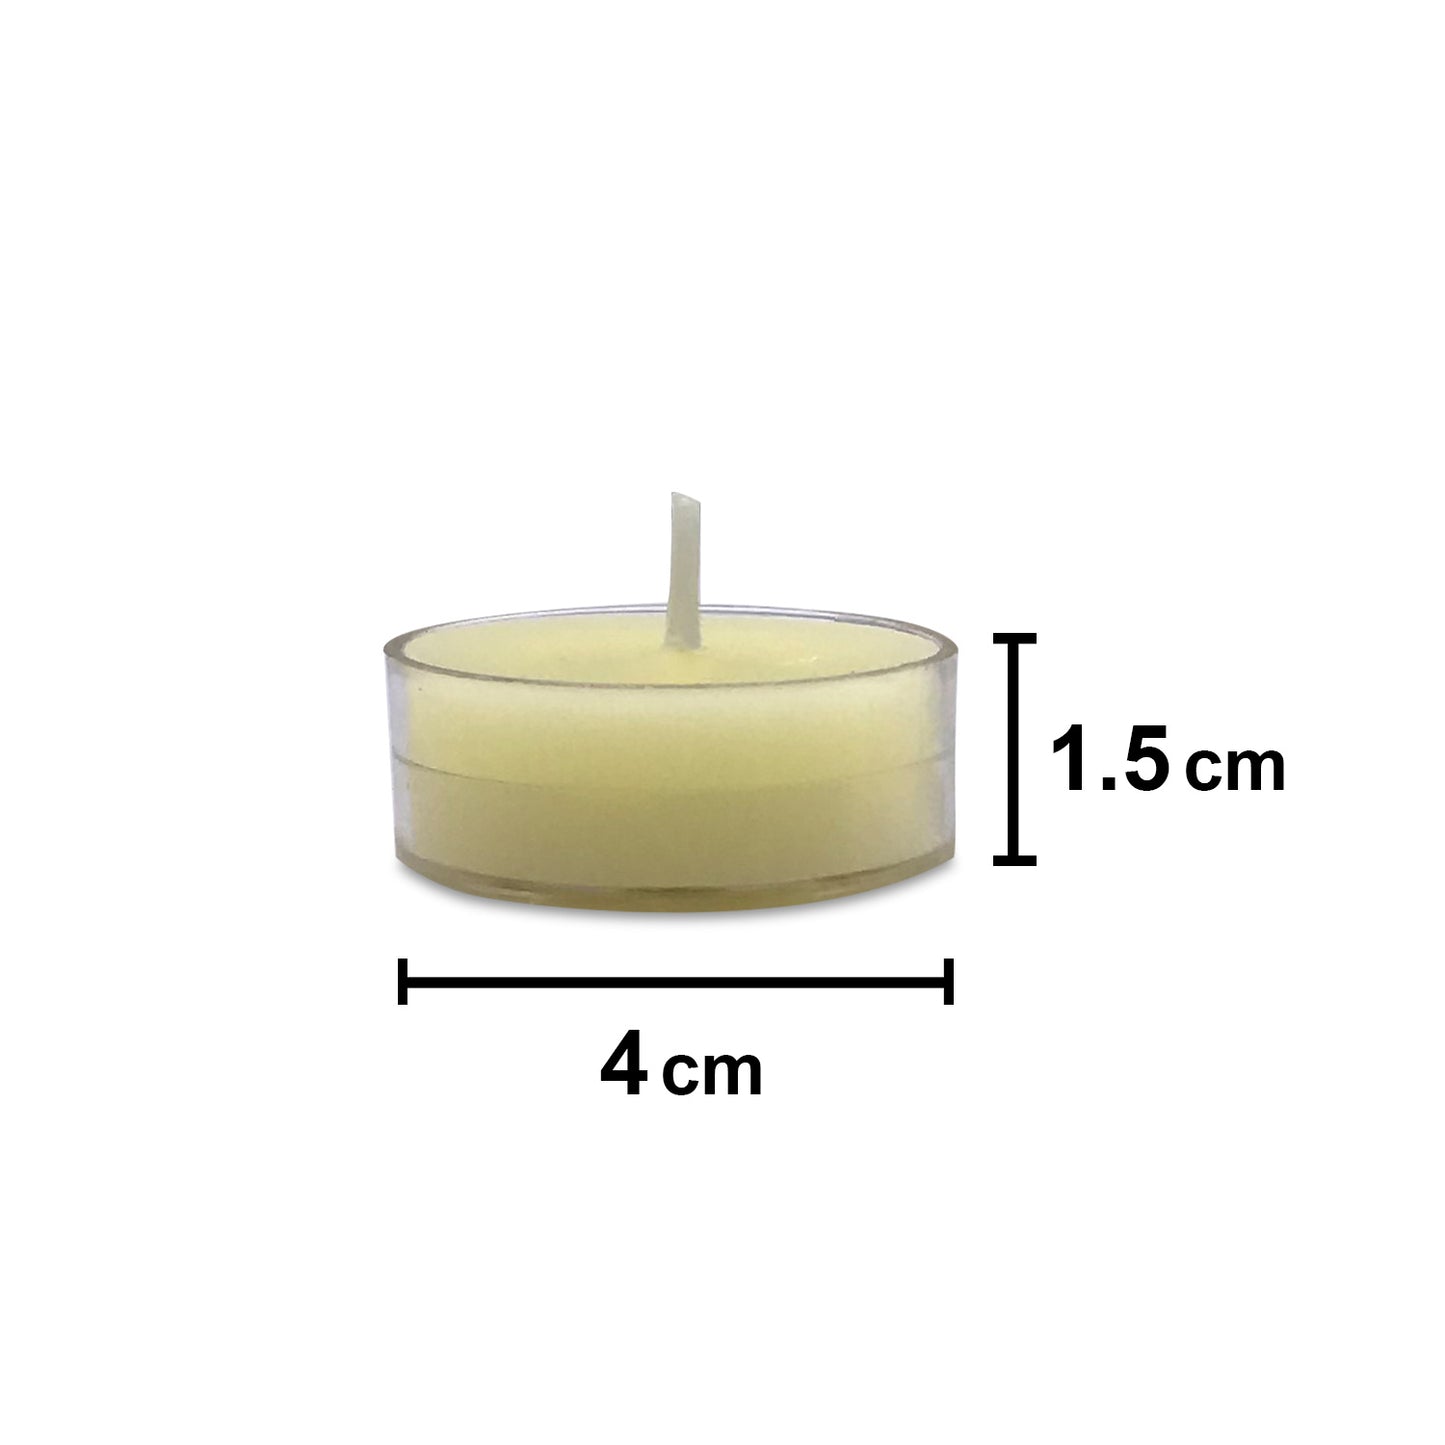 AuraDecor Fragrance Vanilla Shape Tealight ( Pack of 10 )